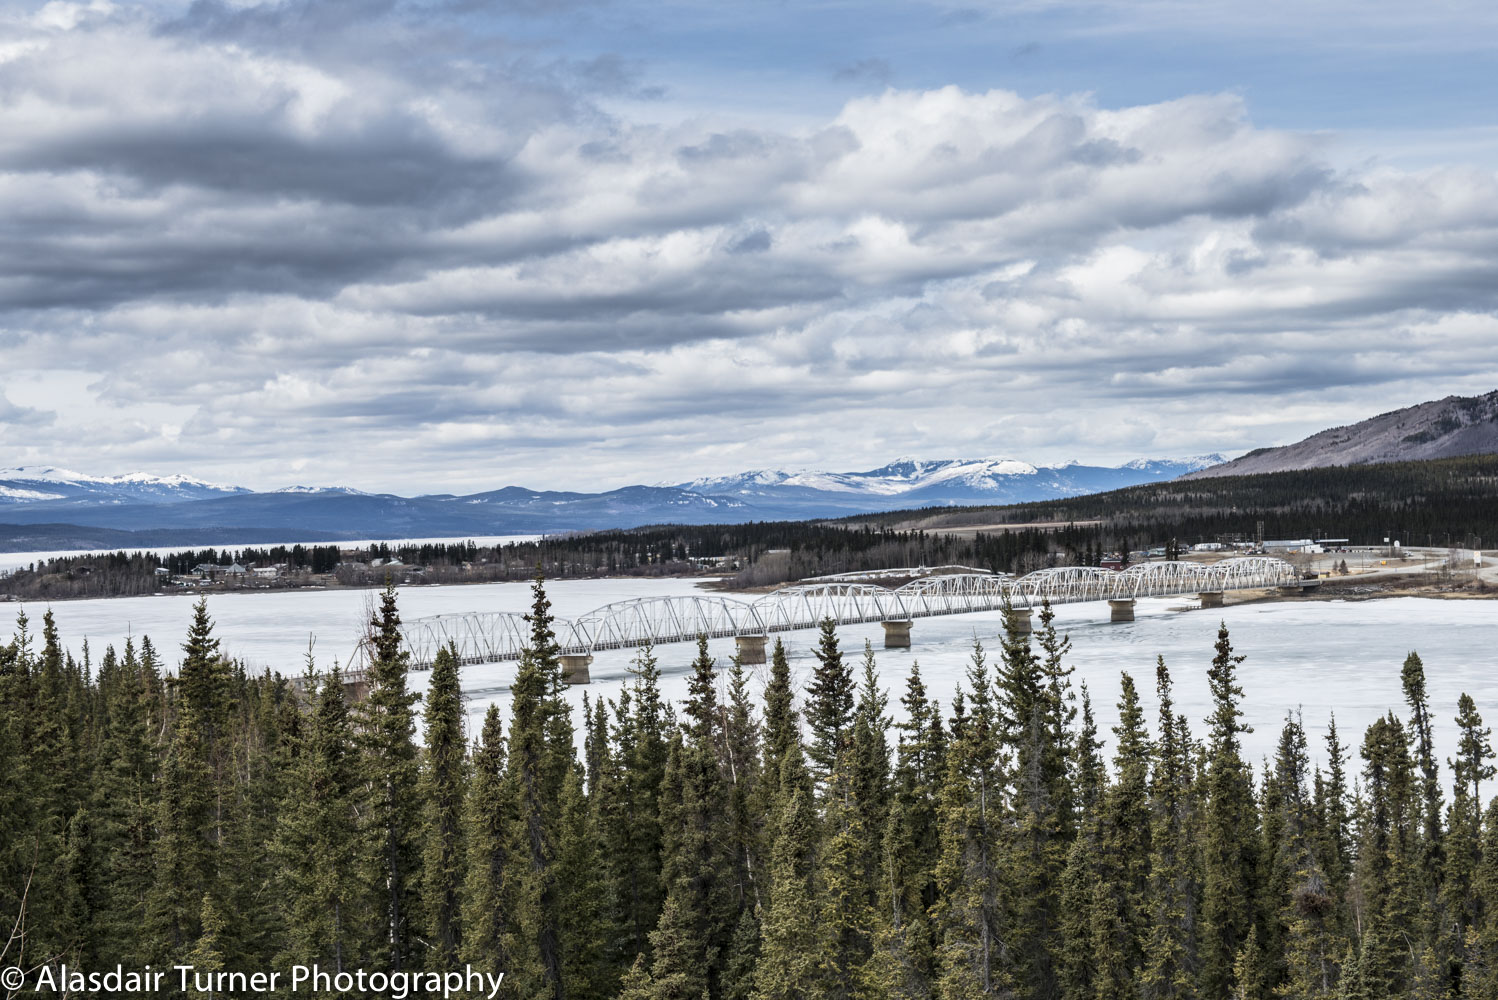  Crossing the still frozen Yukon River. 